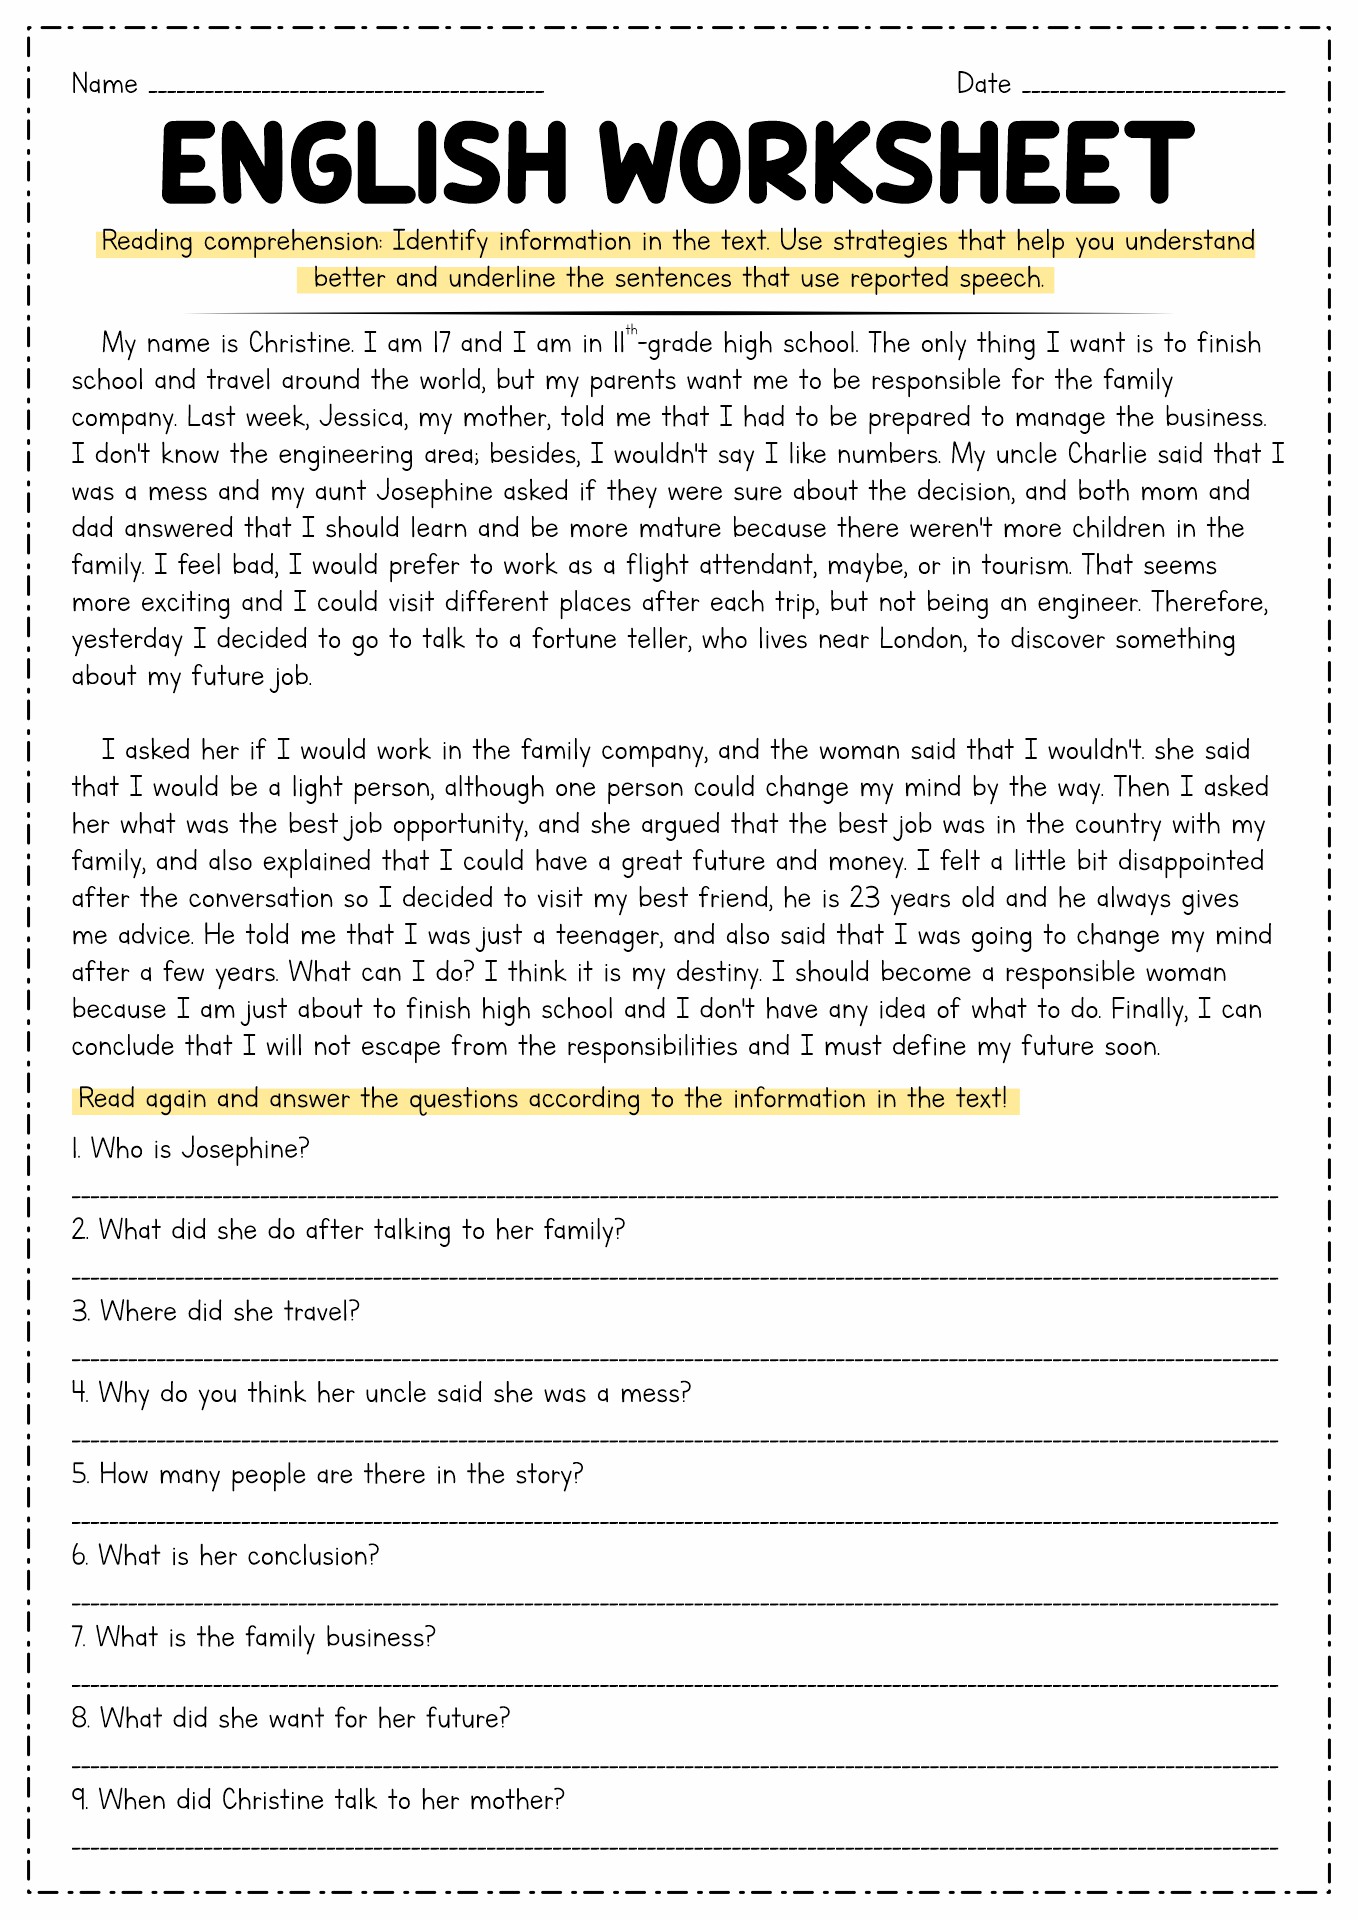 grade-12-english-worksheets-pdf